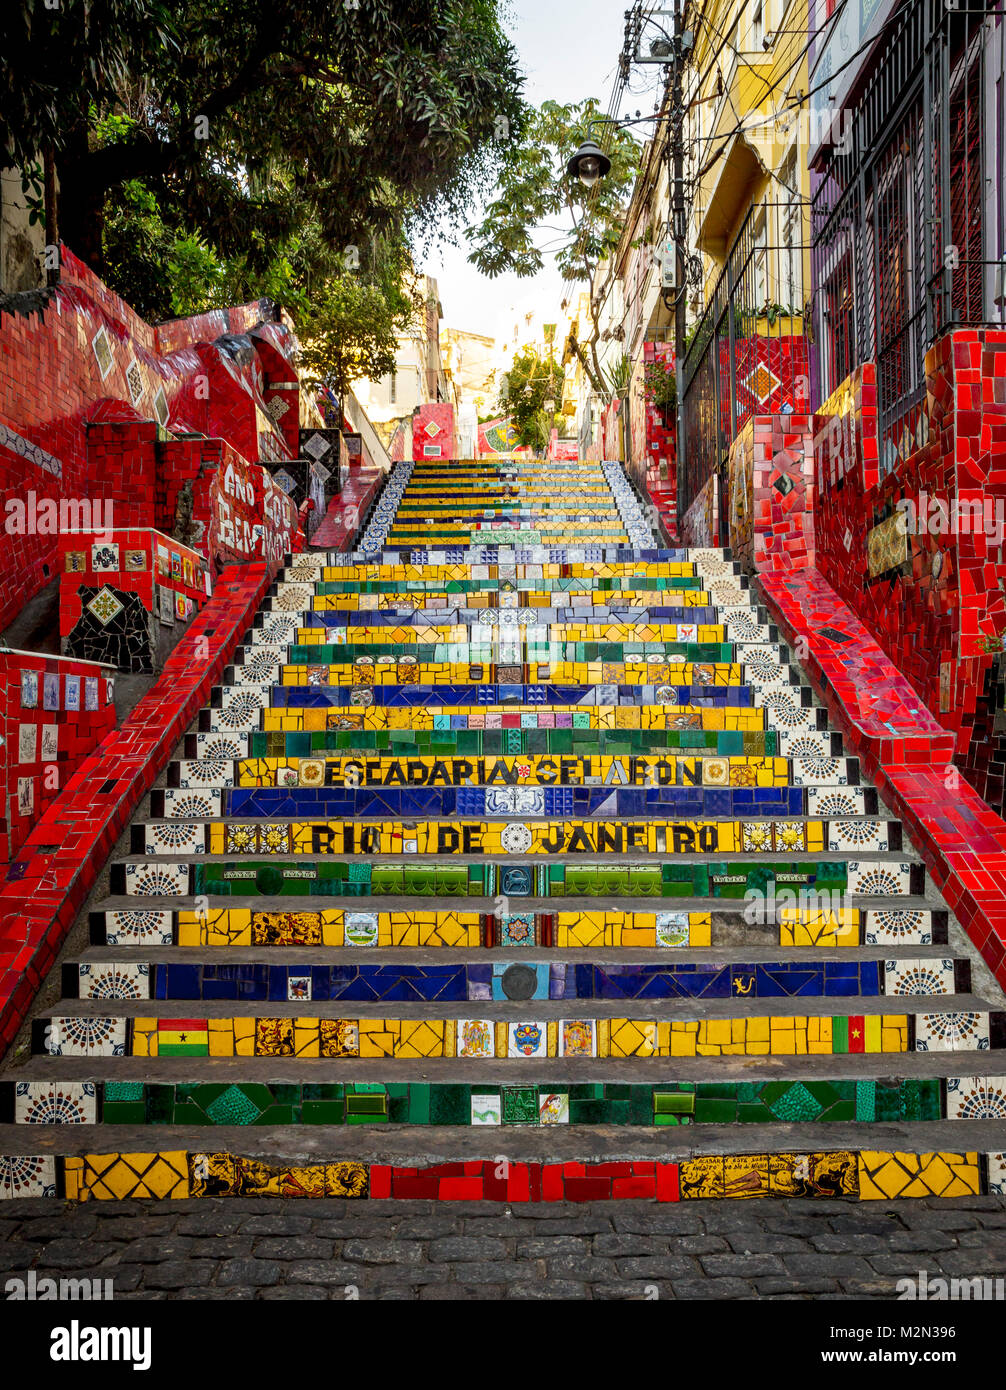 Selaron escadaria-Treppe im Stadtteil Lapa in Rio de Janeiro, Brasilien Stockfoto